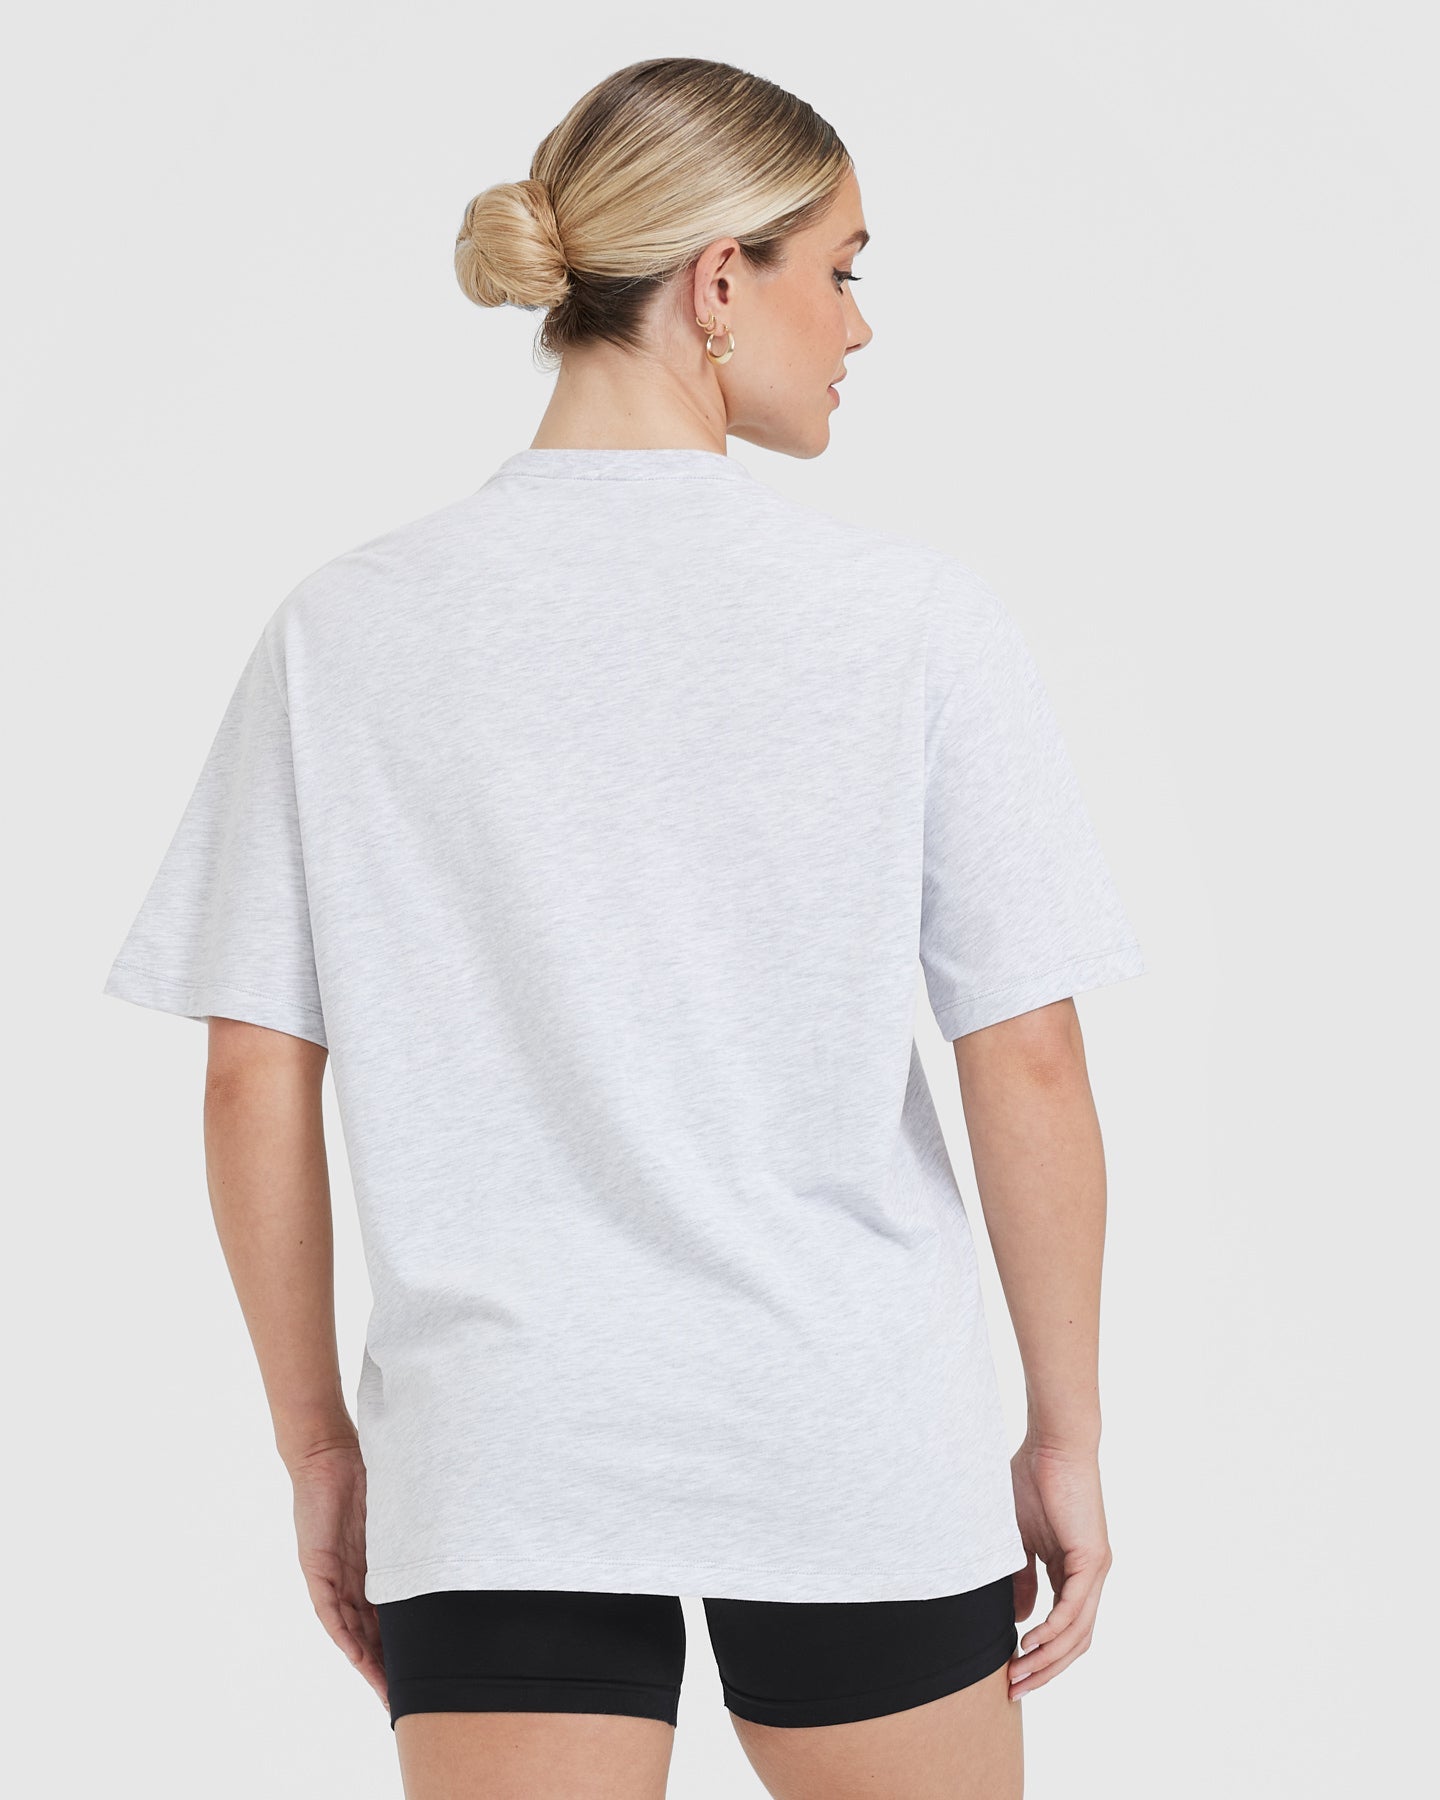 Oversized Gym Shirt Women's - Light Grey Marl